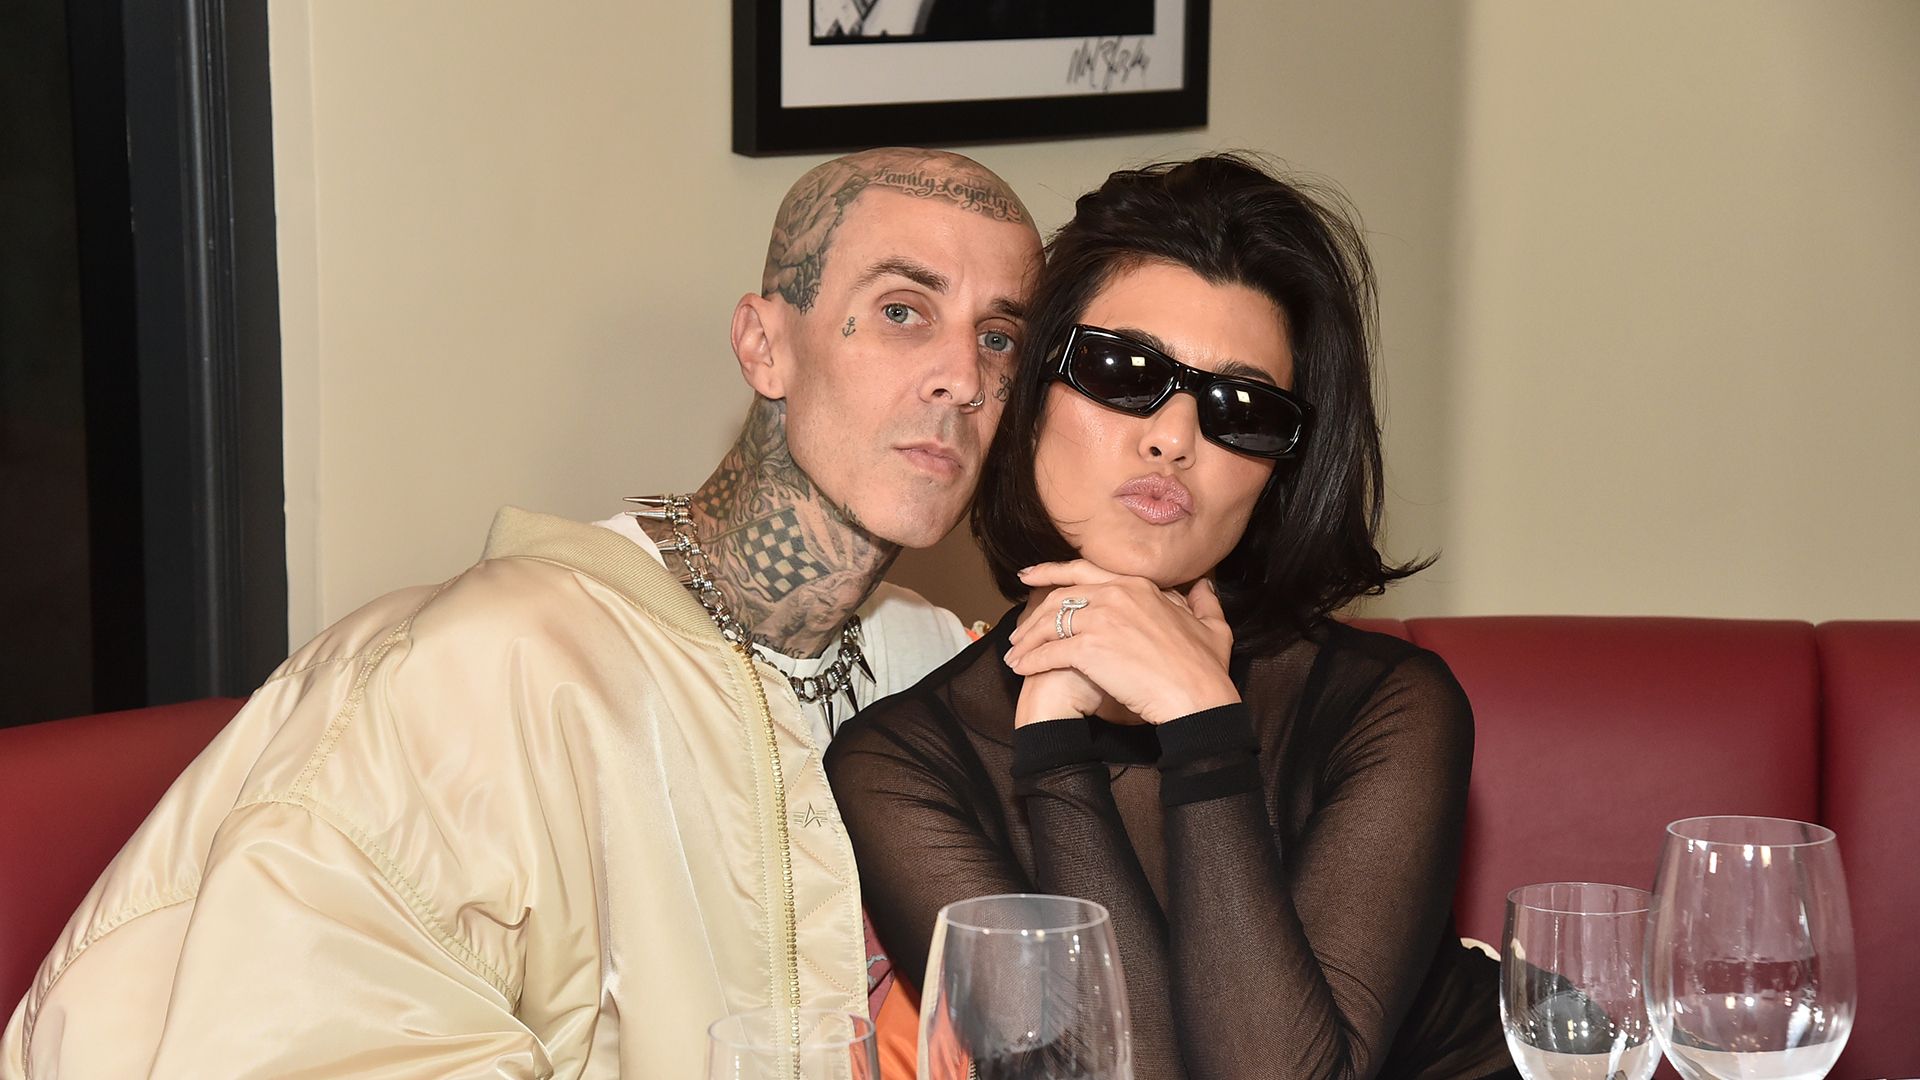 Kourtney Kardashian and Travis Barker sitting in a restaurant booth together